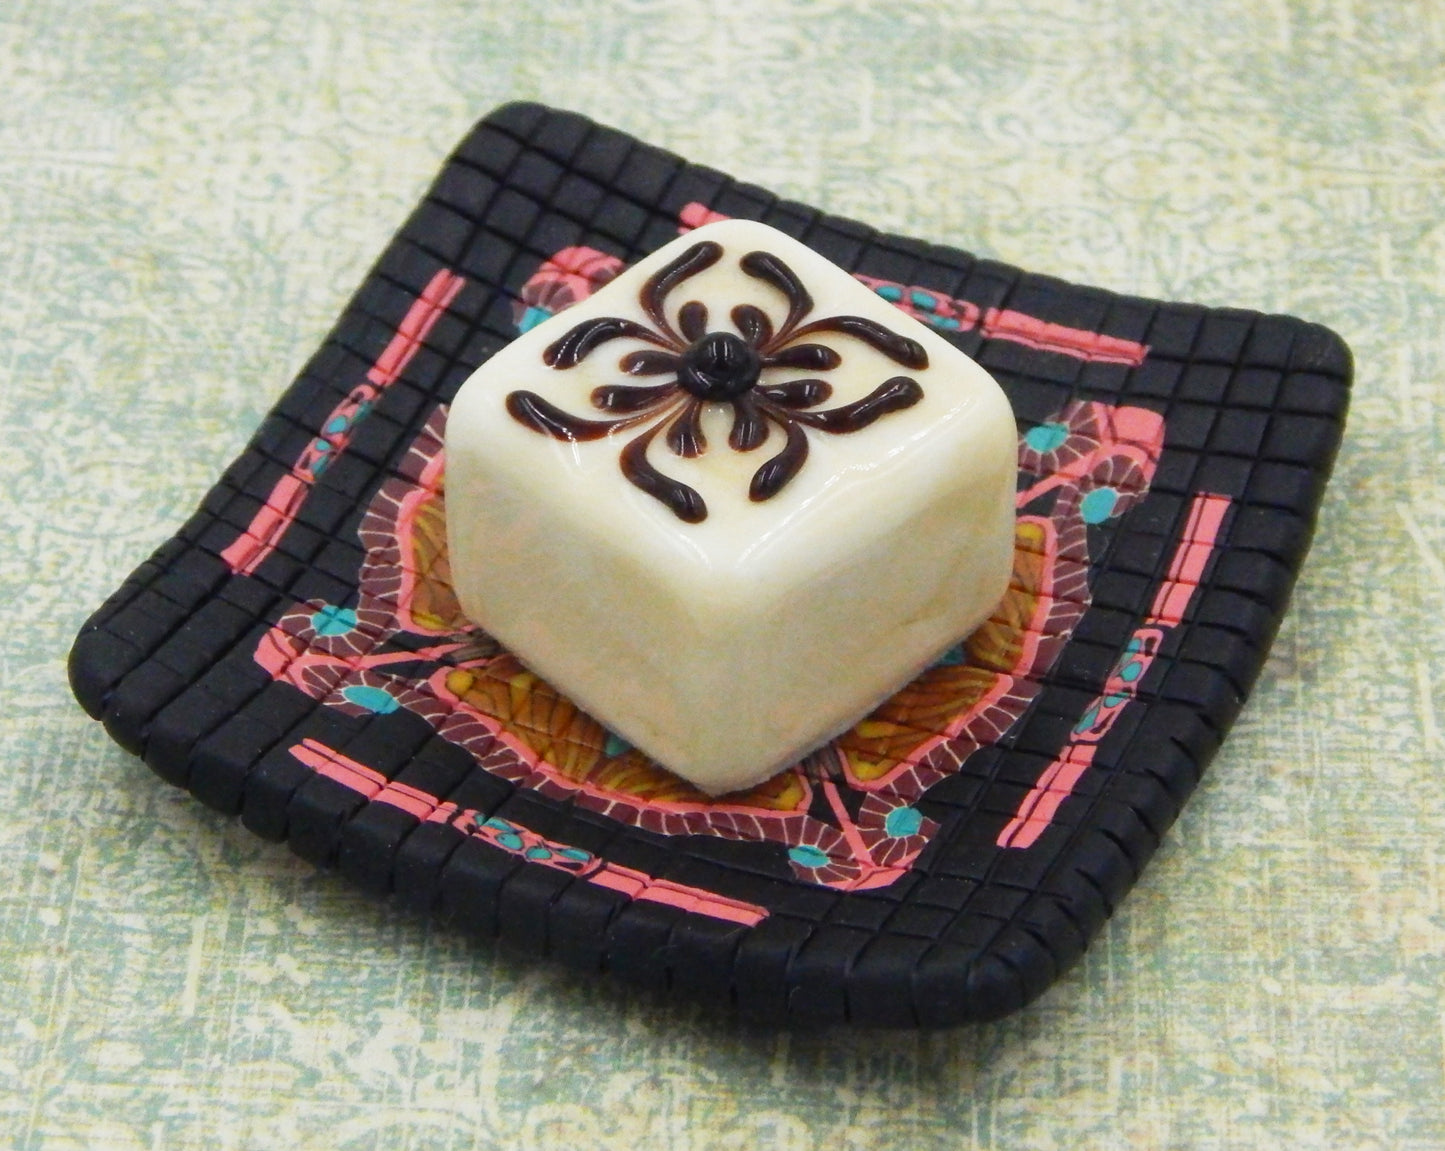 Vanilla Treat with Chocolate Design (18-060VC)